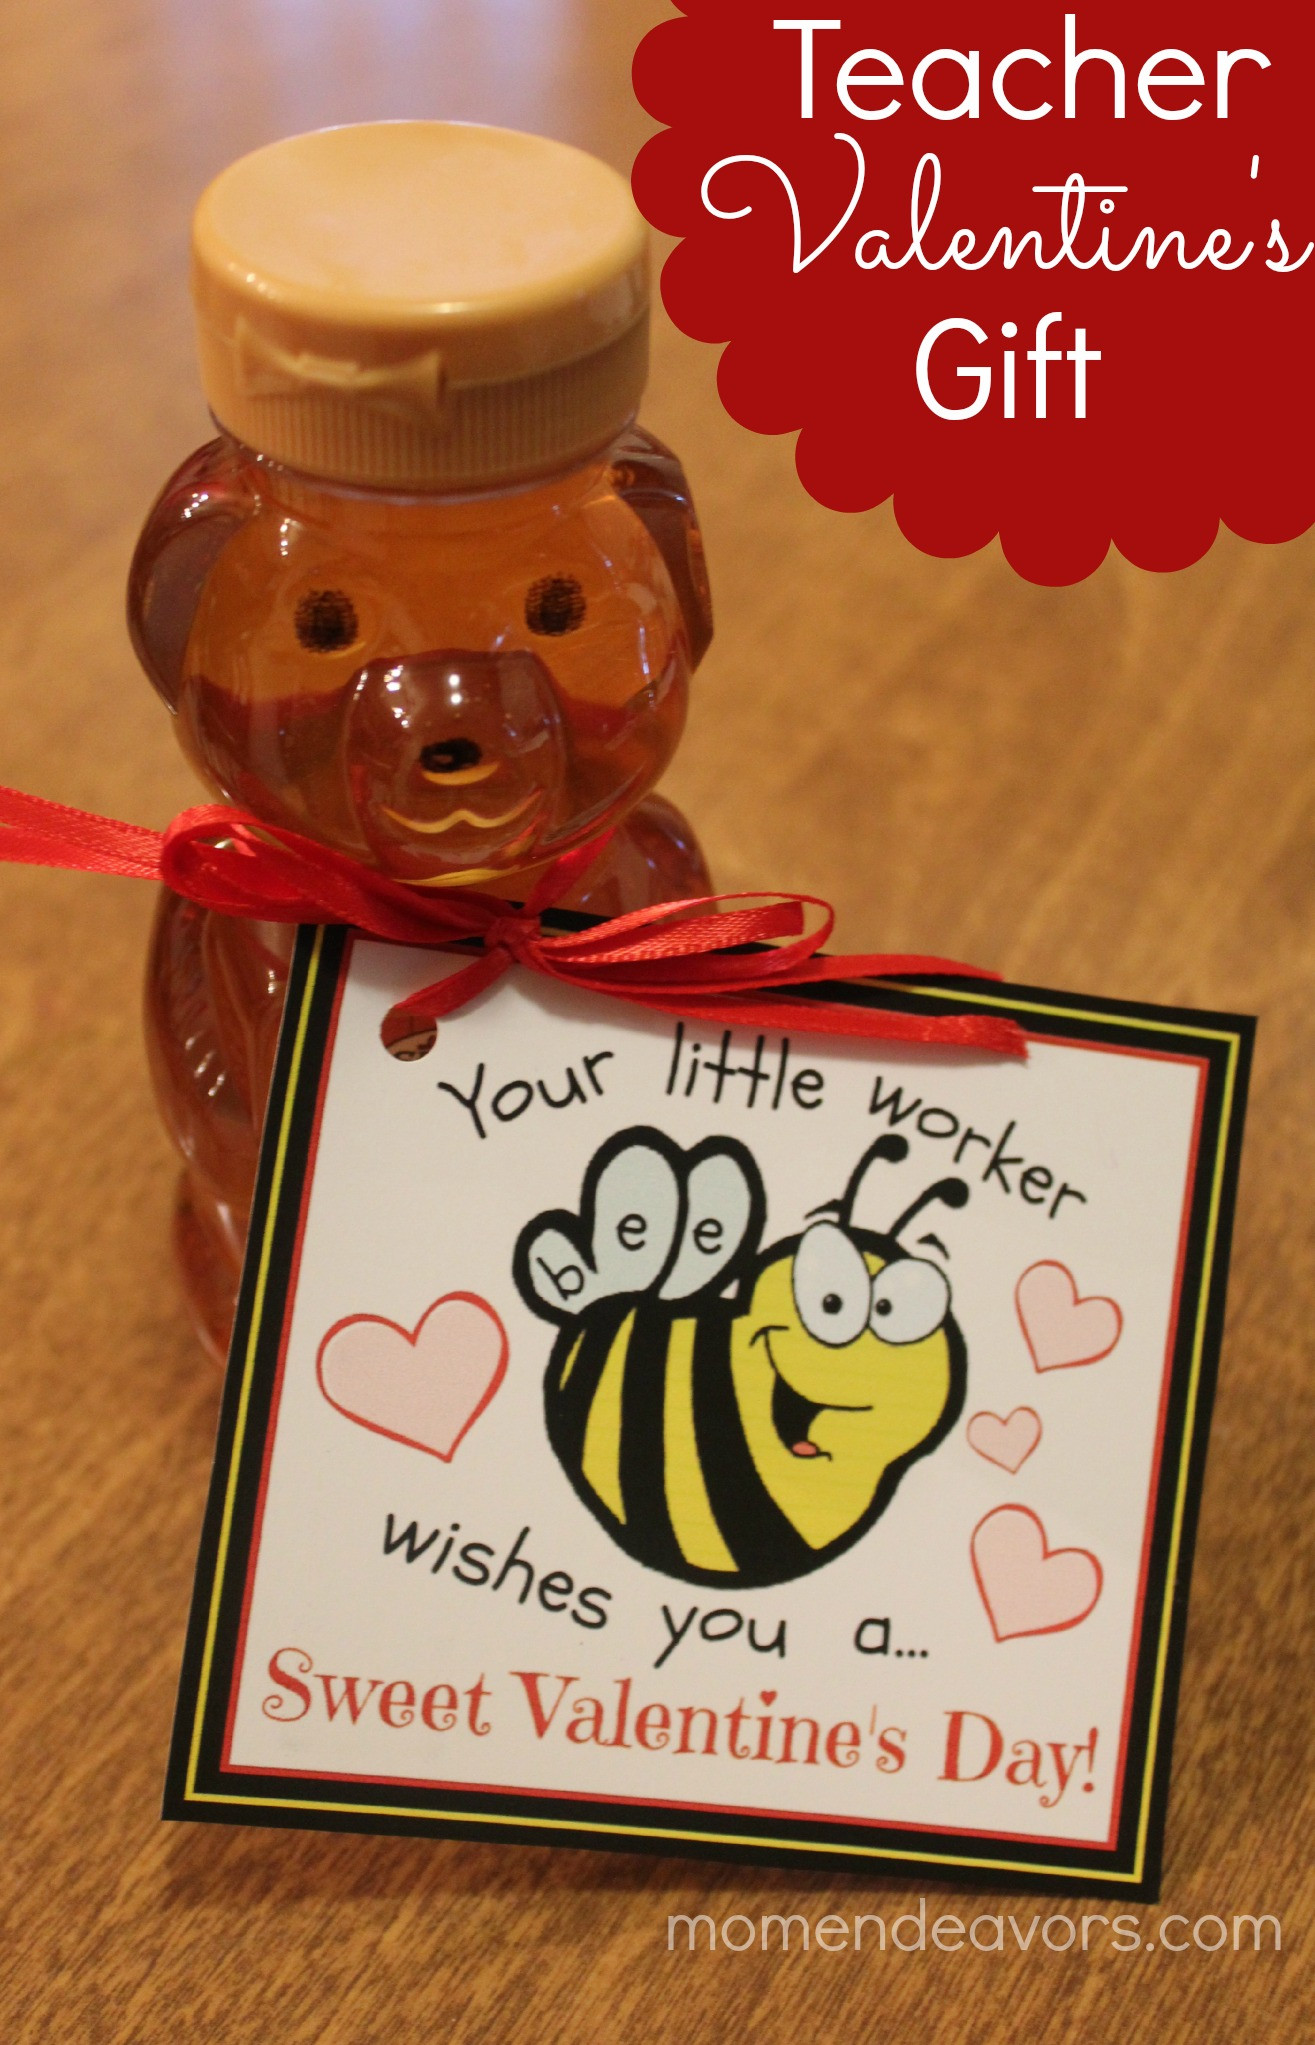 Valentine Day Gift Ideas For Teachers
 Bee themed Teacher Valentine’s Gift